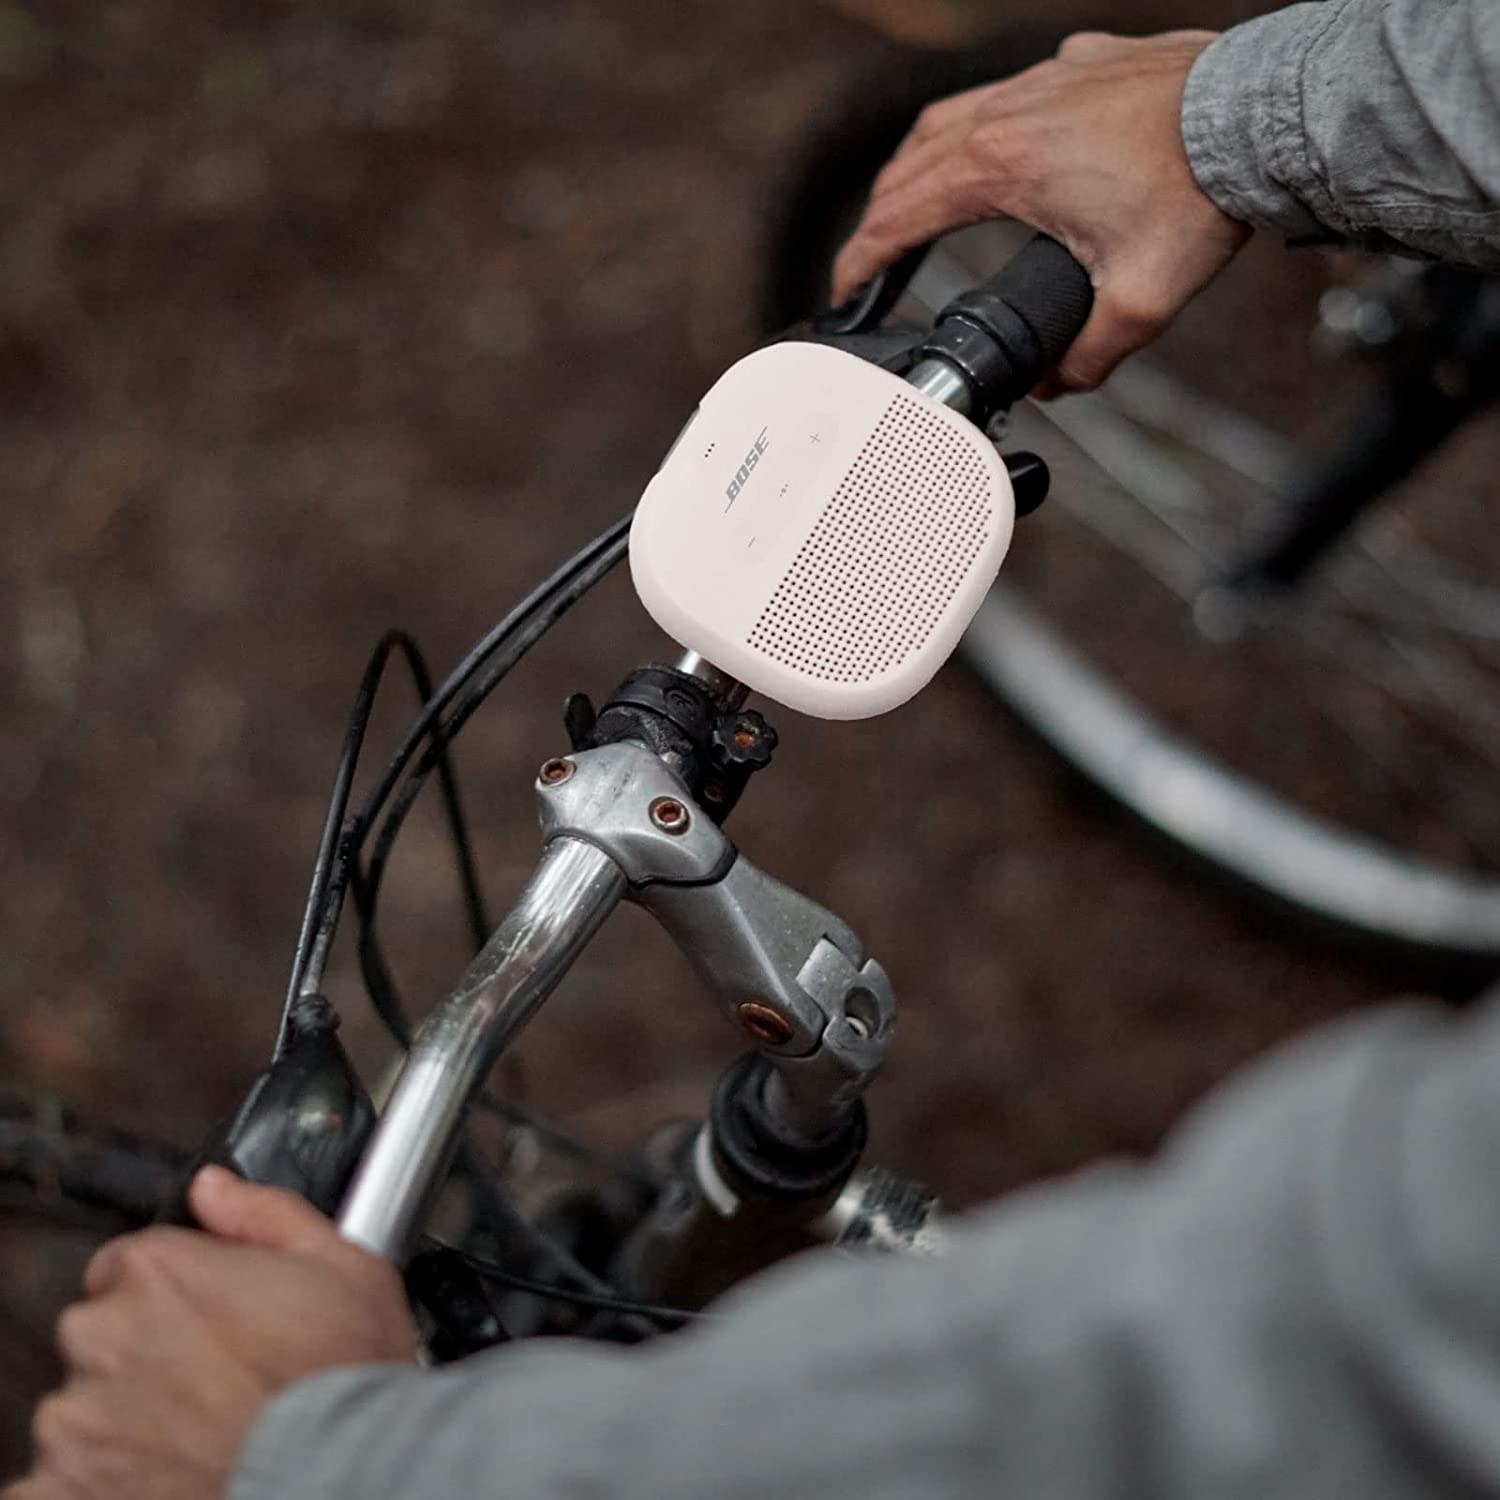 The portable speaker on a bike